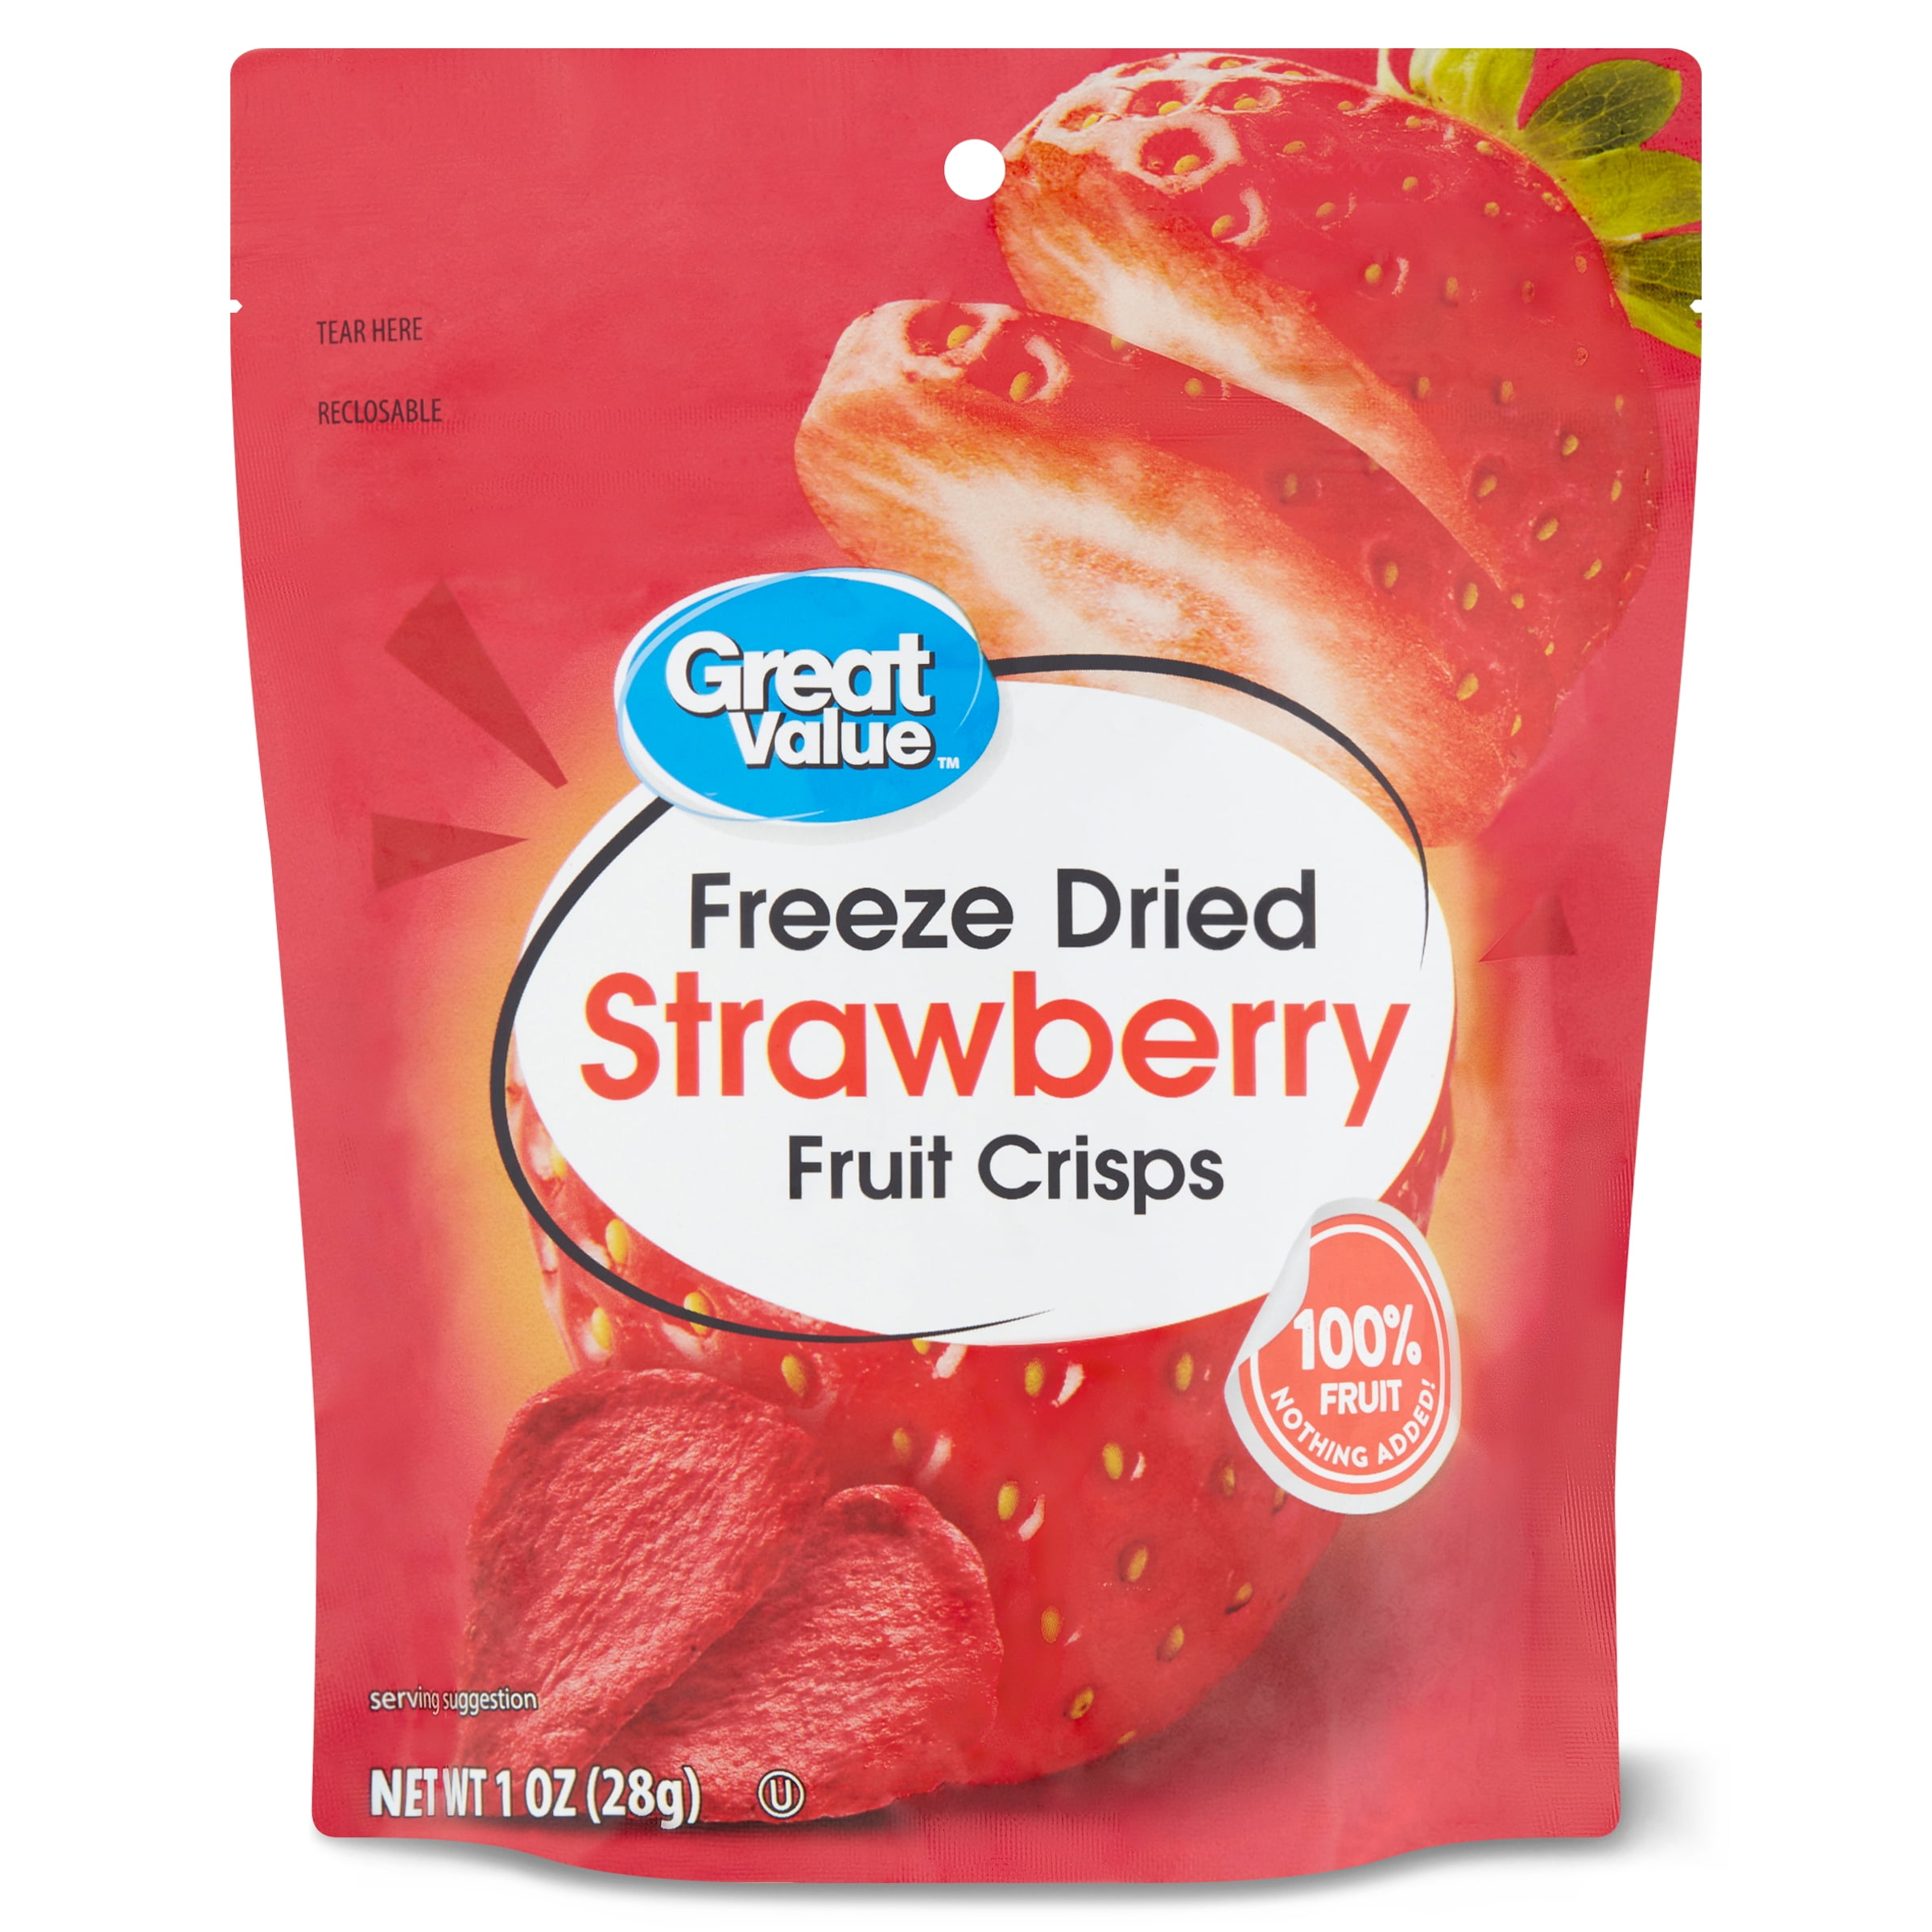 Great Value Freeze Dried Strawberry Fruit Crisps, 1 oz